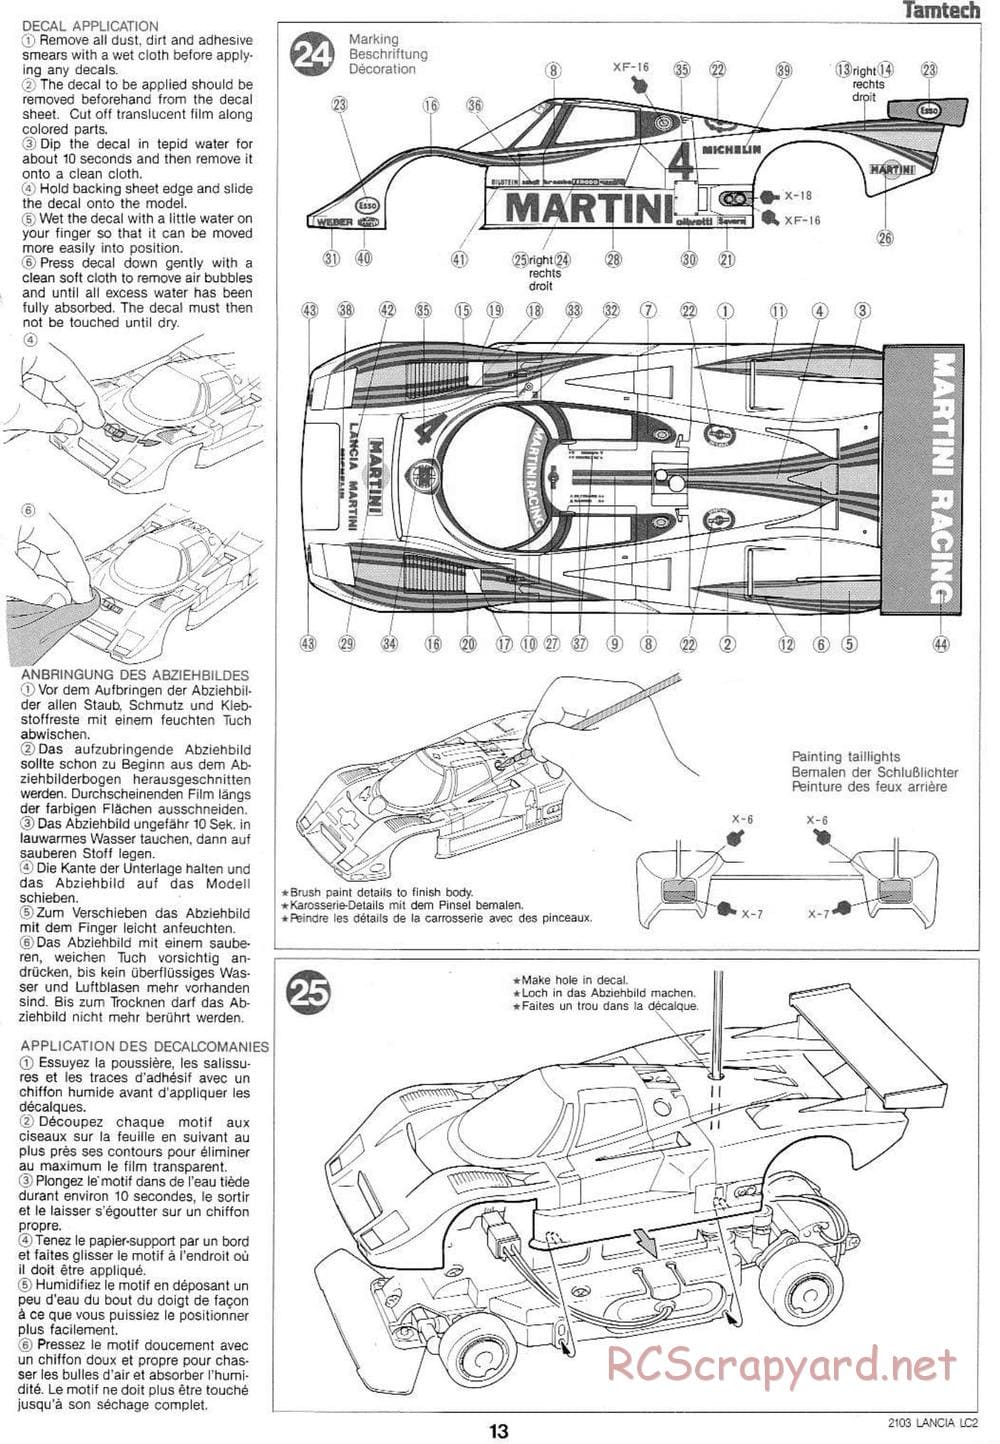 Tamiya - Tamtech - Lancia LC2 Chassis - Manual - Page 13